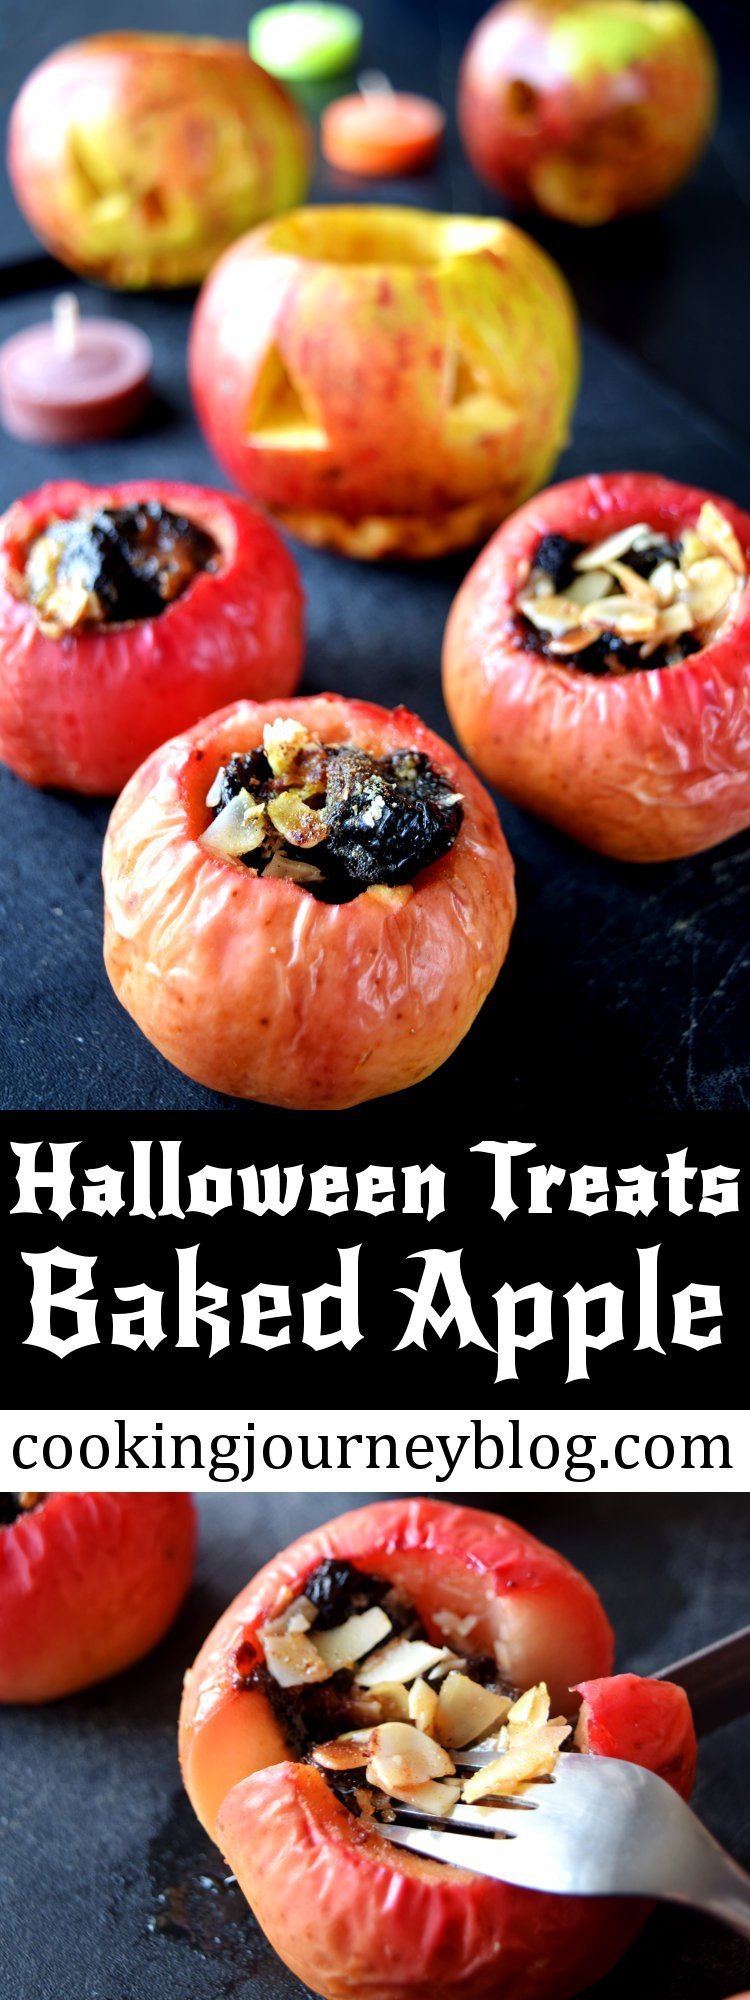 Baked apple – Healthy Halloween treats